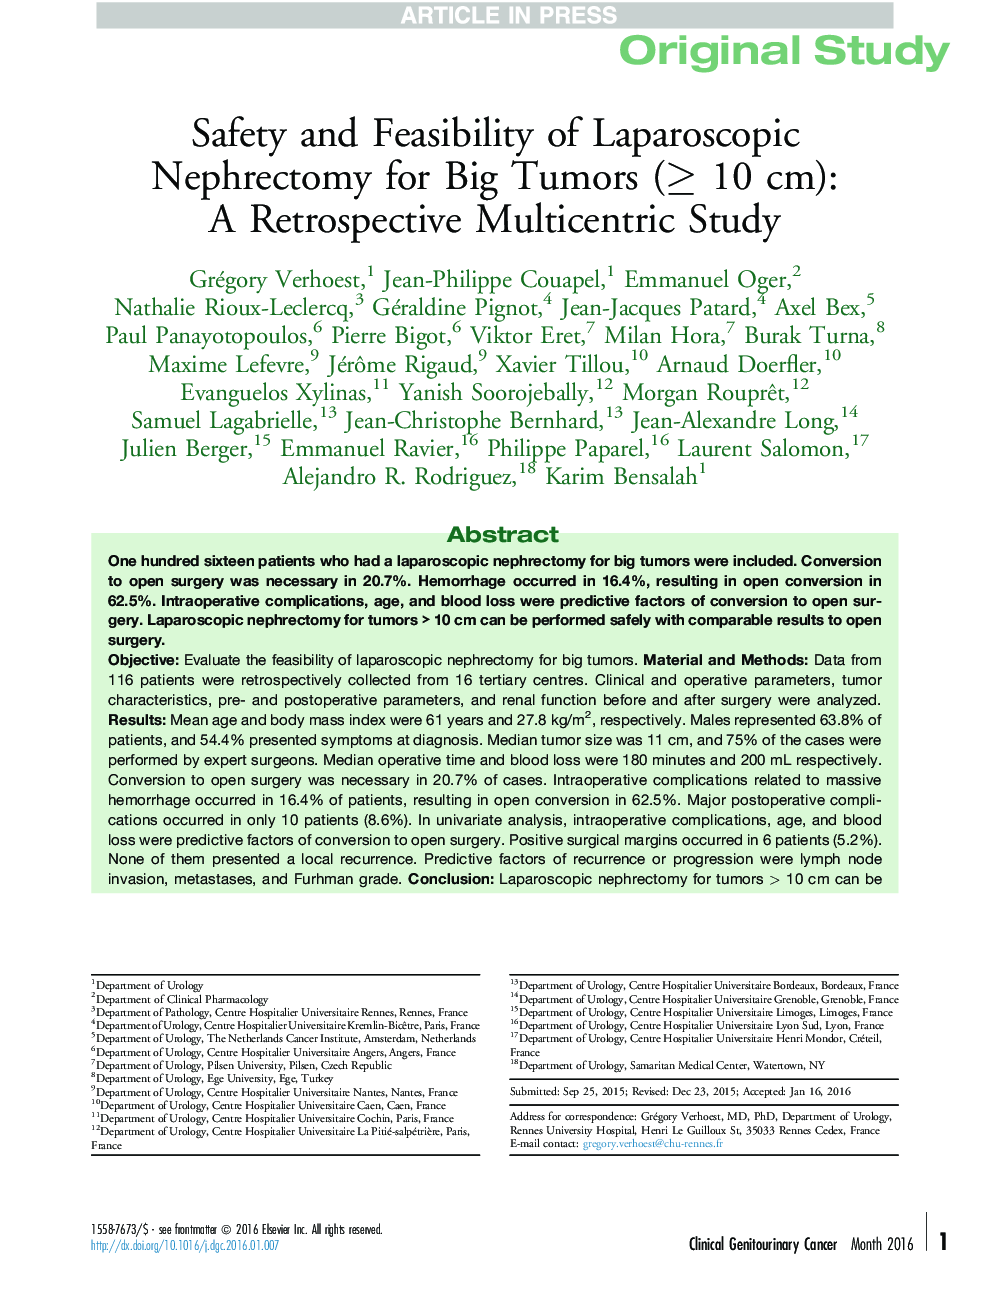 Safety and Feasibility of Laparoscopic Nephrectomy for Big Tumors (â¥ 10 cm): A Retrospective Multicentric Study